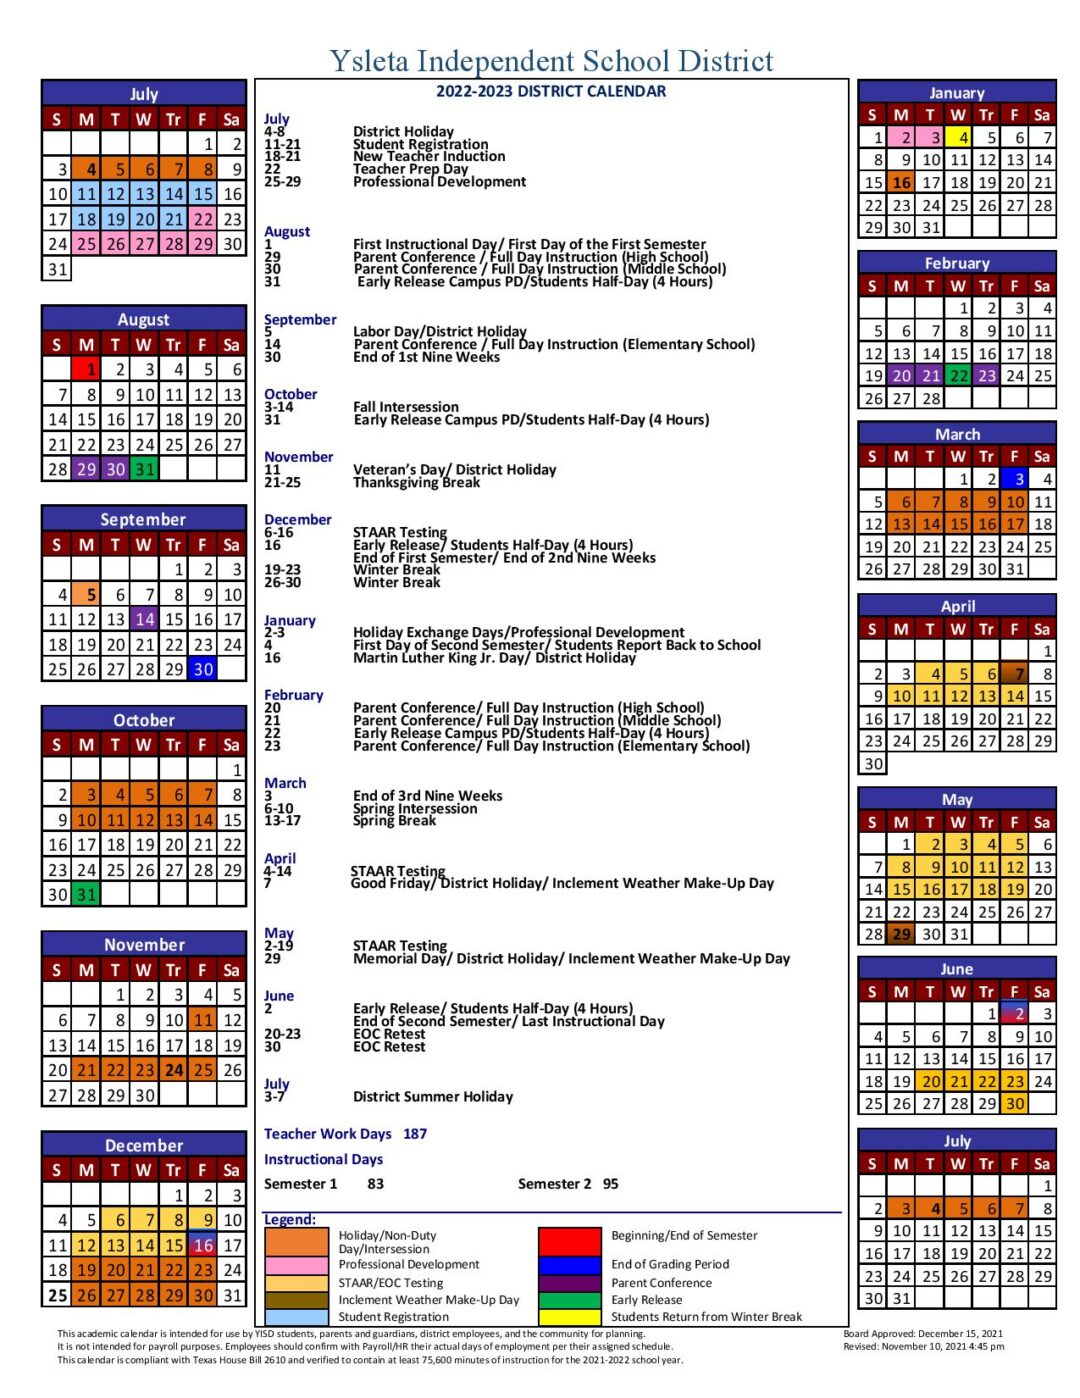 Ysleta Independent School District Calendar 2022-2023